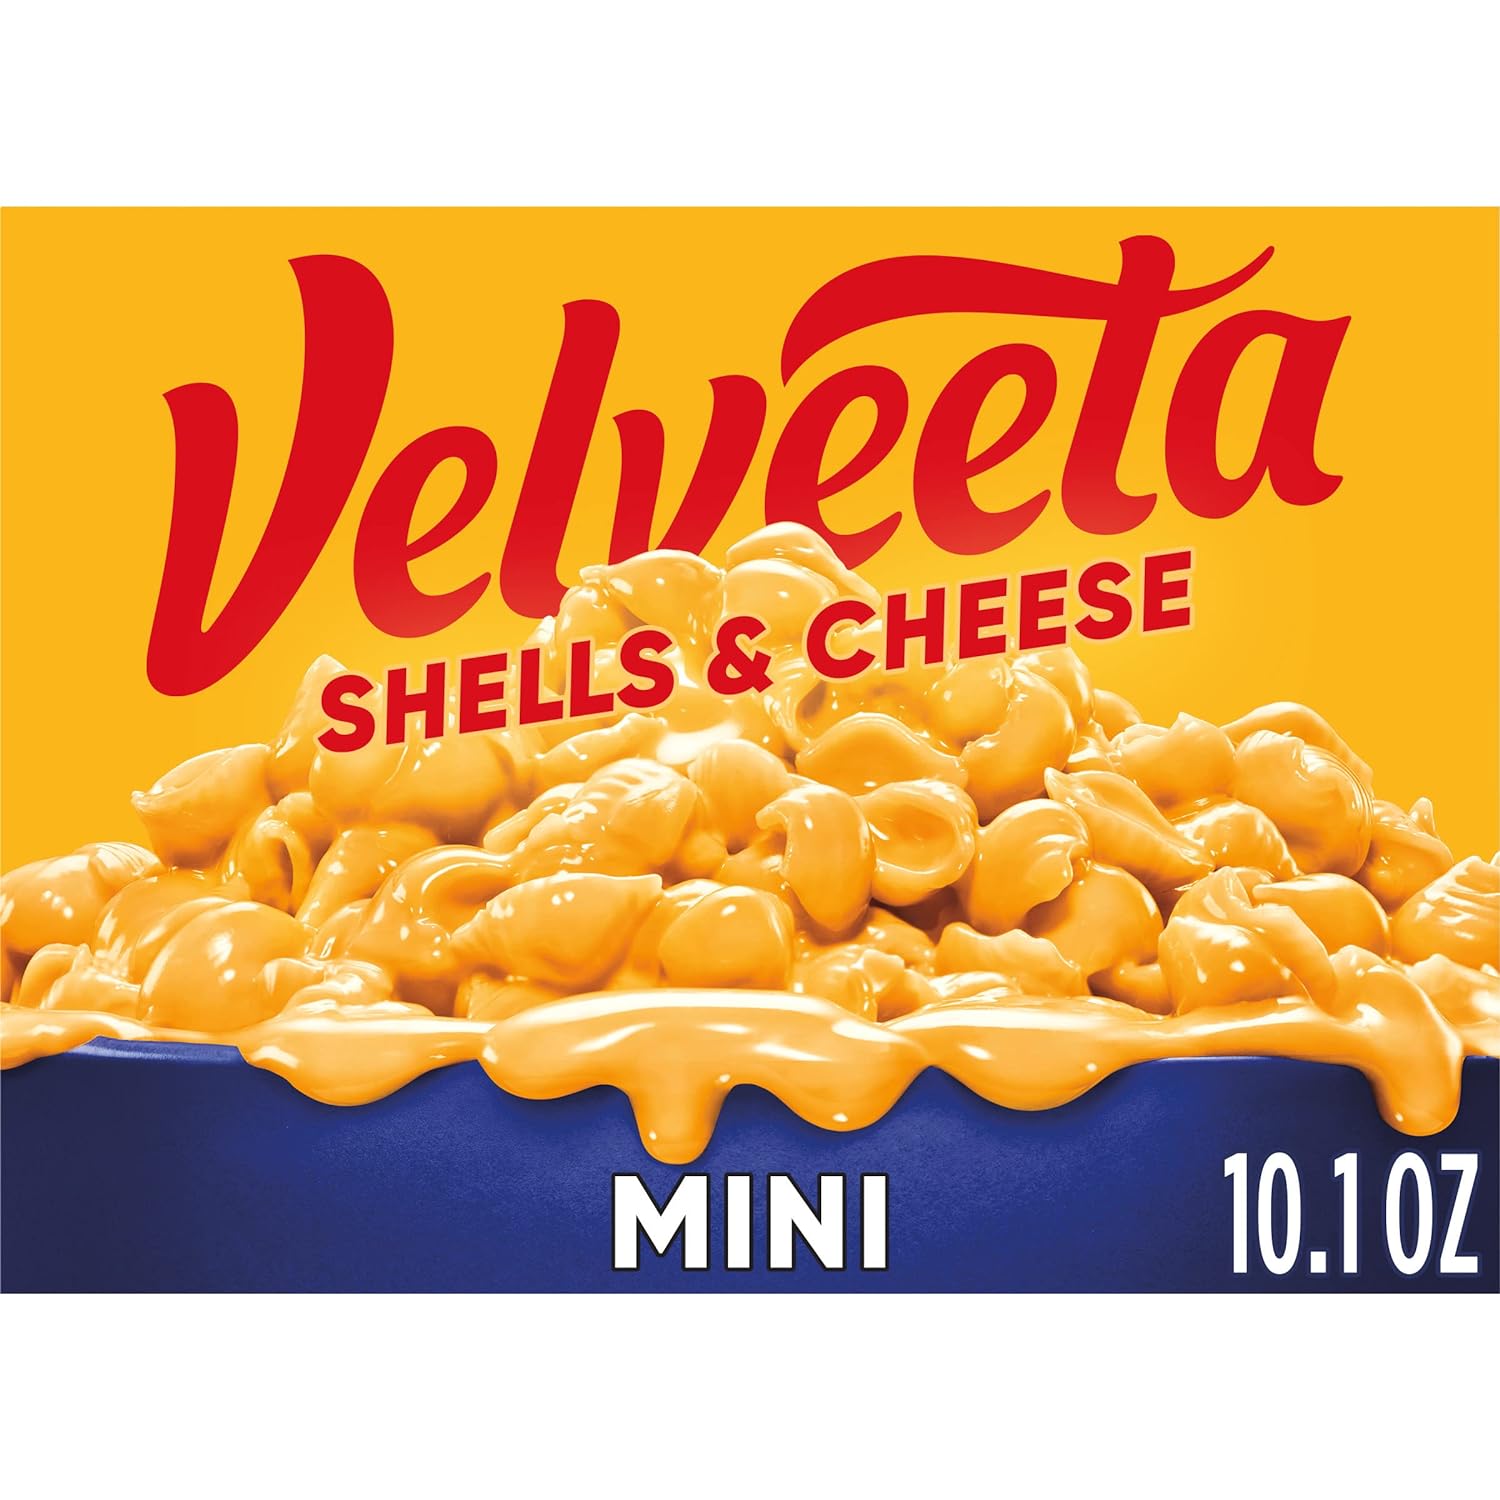 Velveeta Shells and Cheese, Original Mini, 10.1 oz